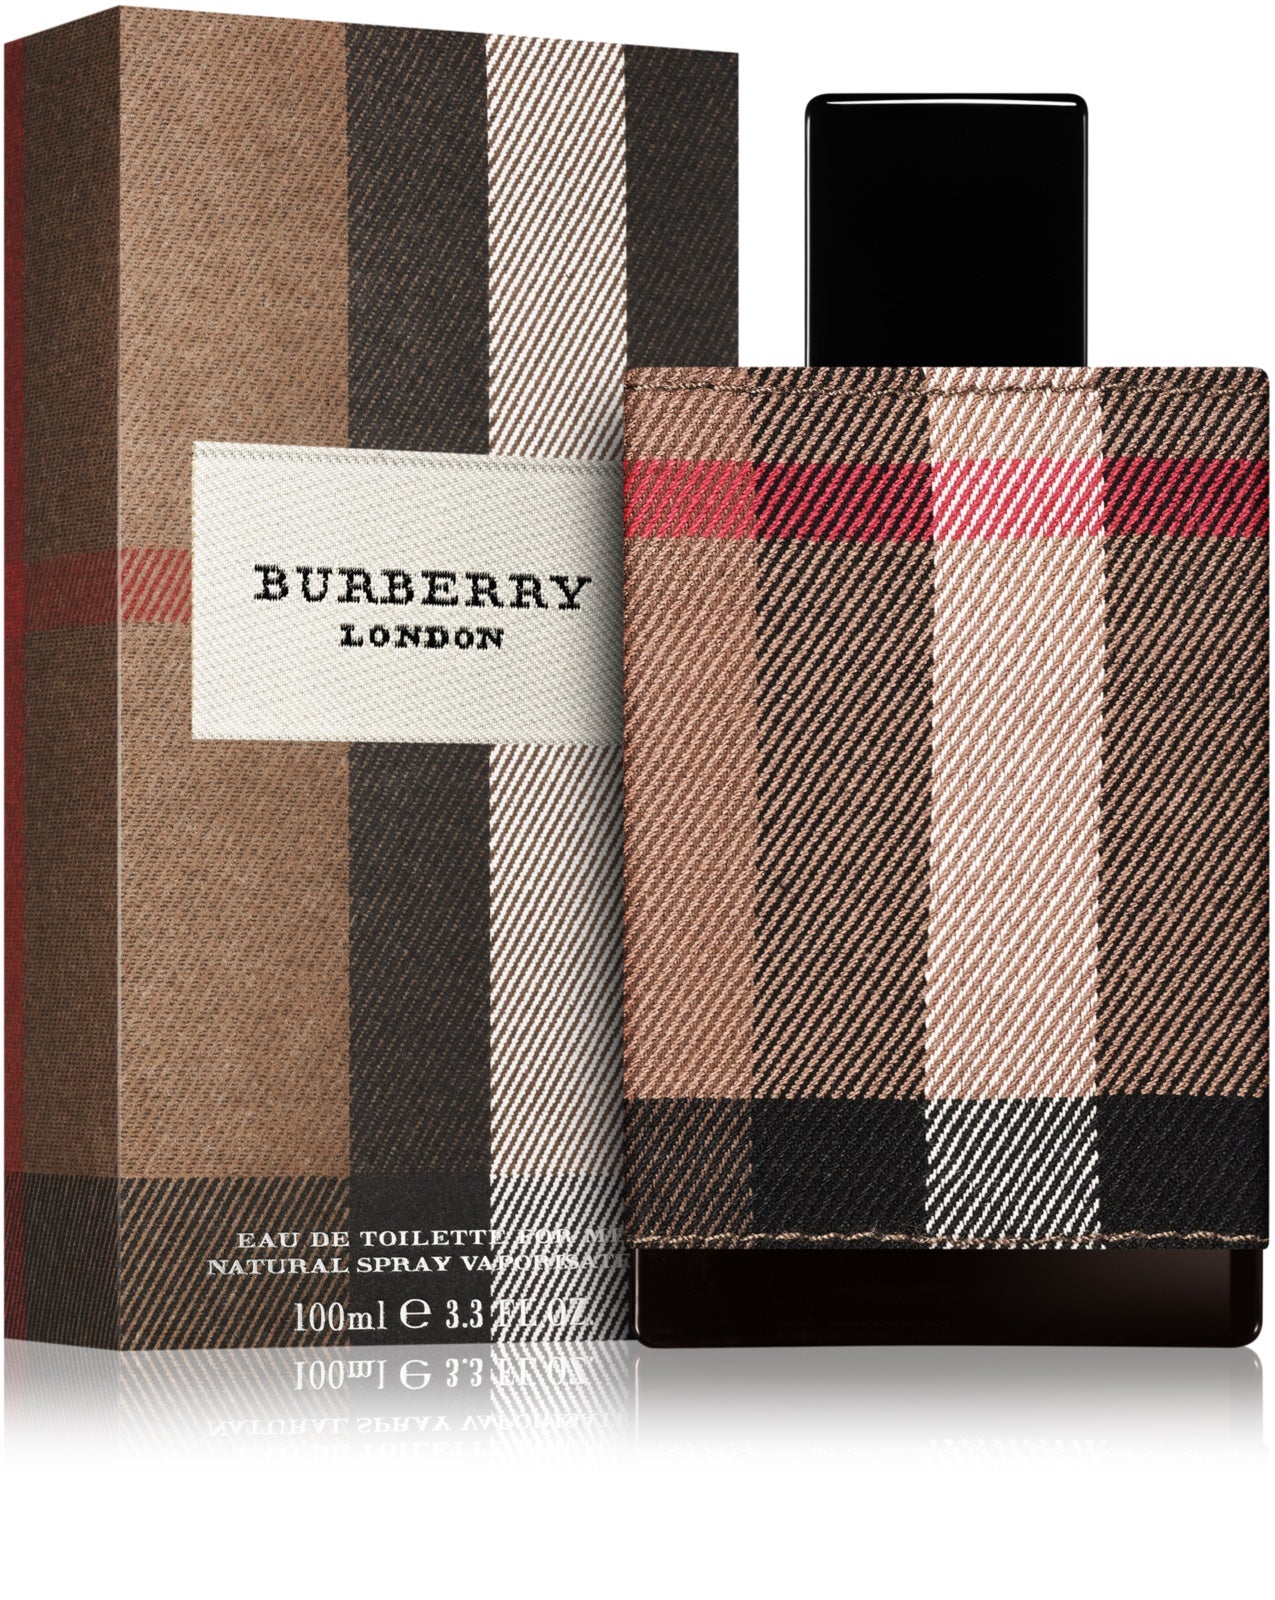 Burberry London EDT for Men - Perfume Planet 